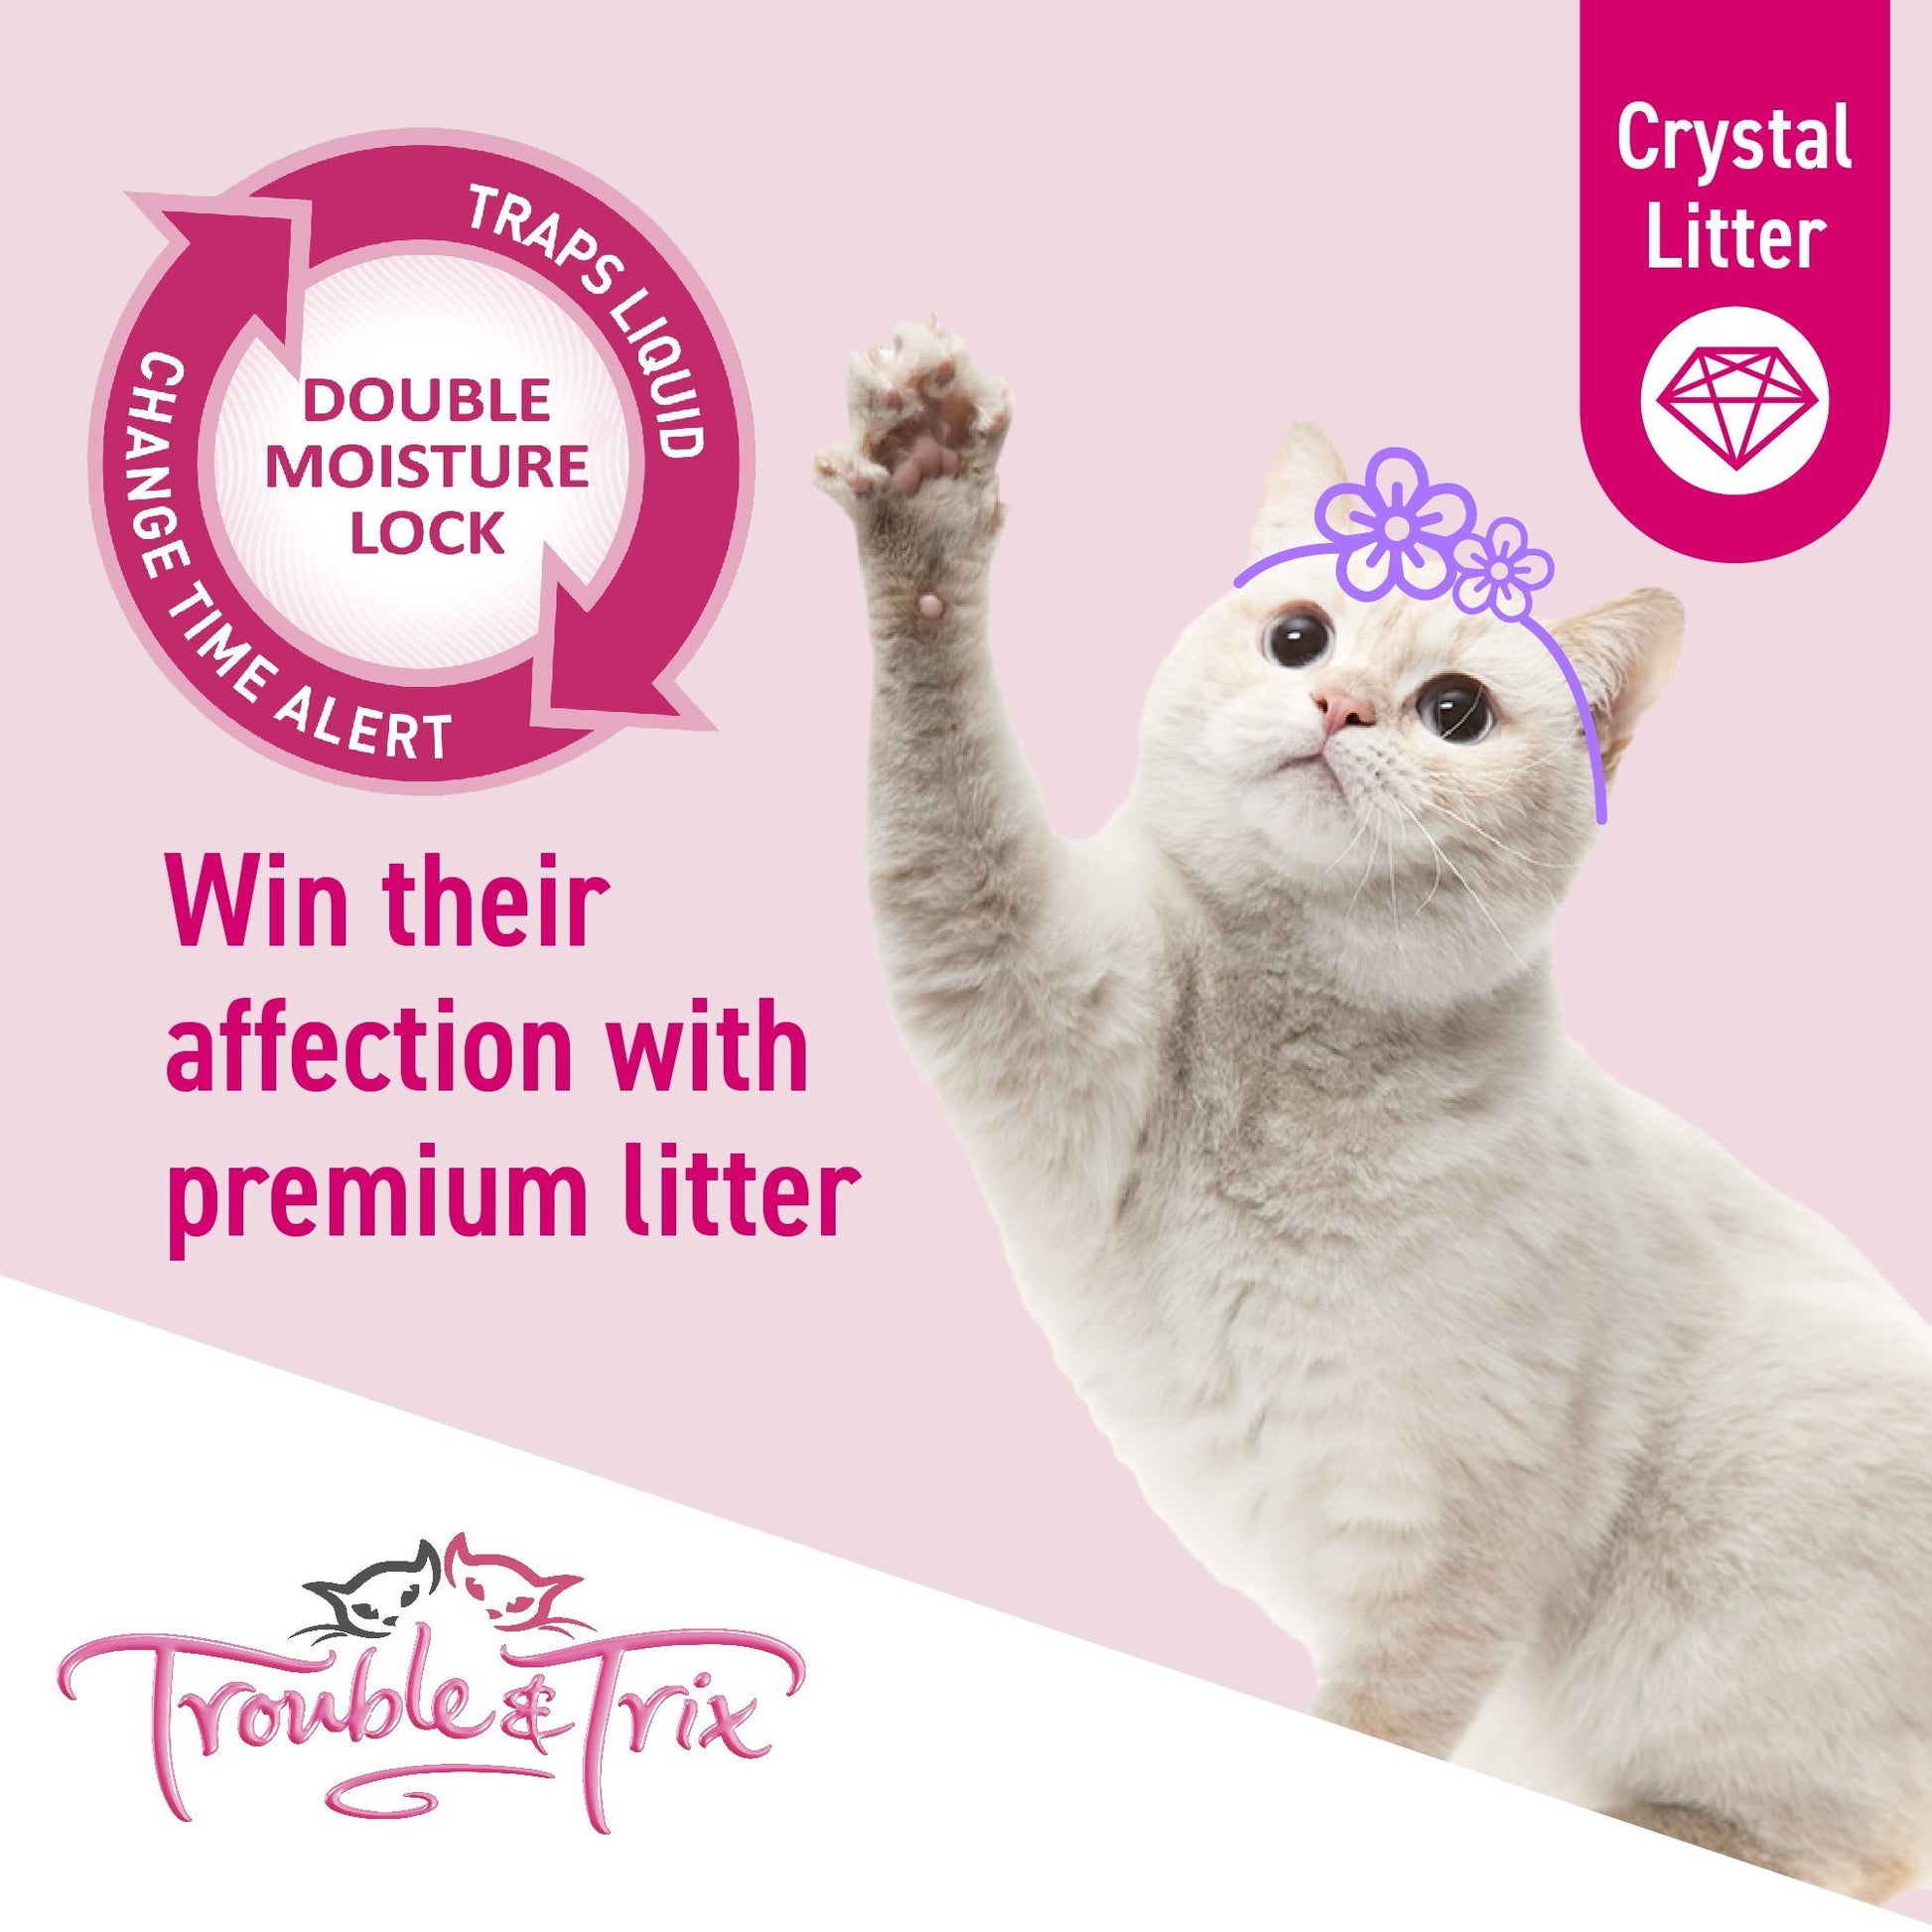 Trouble & Trix Crystals Cat Litter - Woonona Petfood & Produce